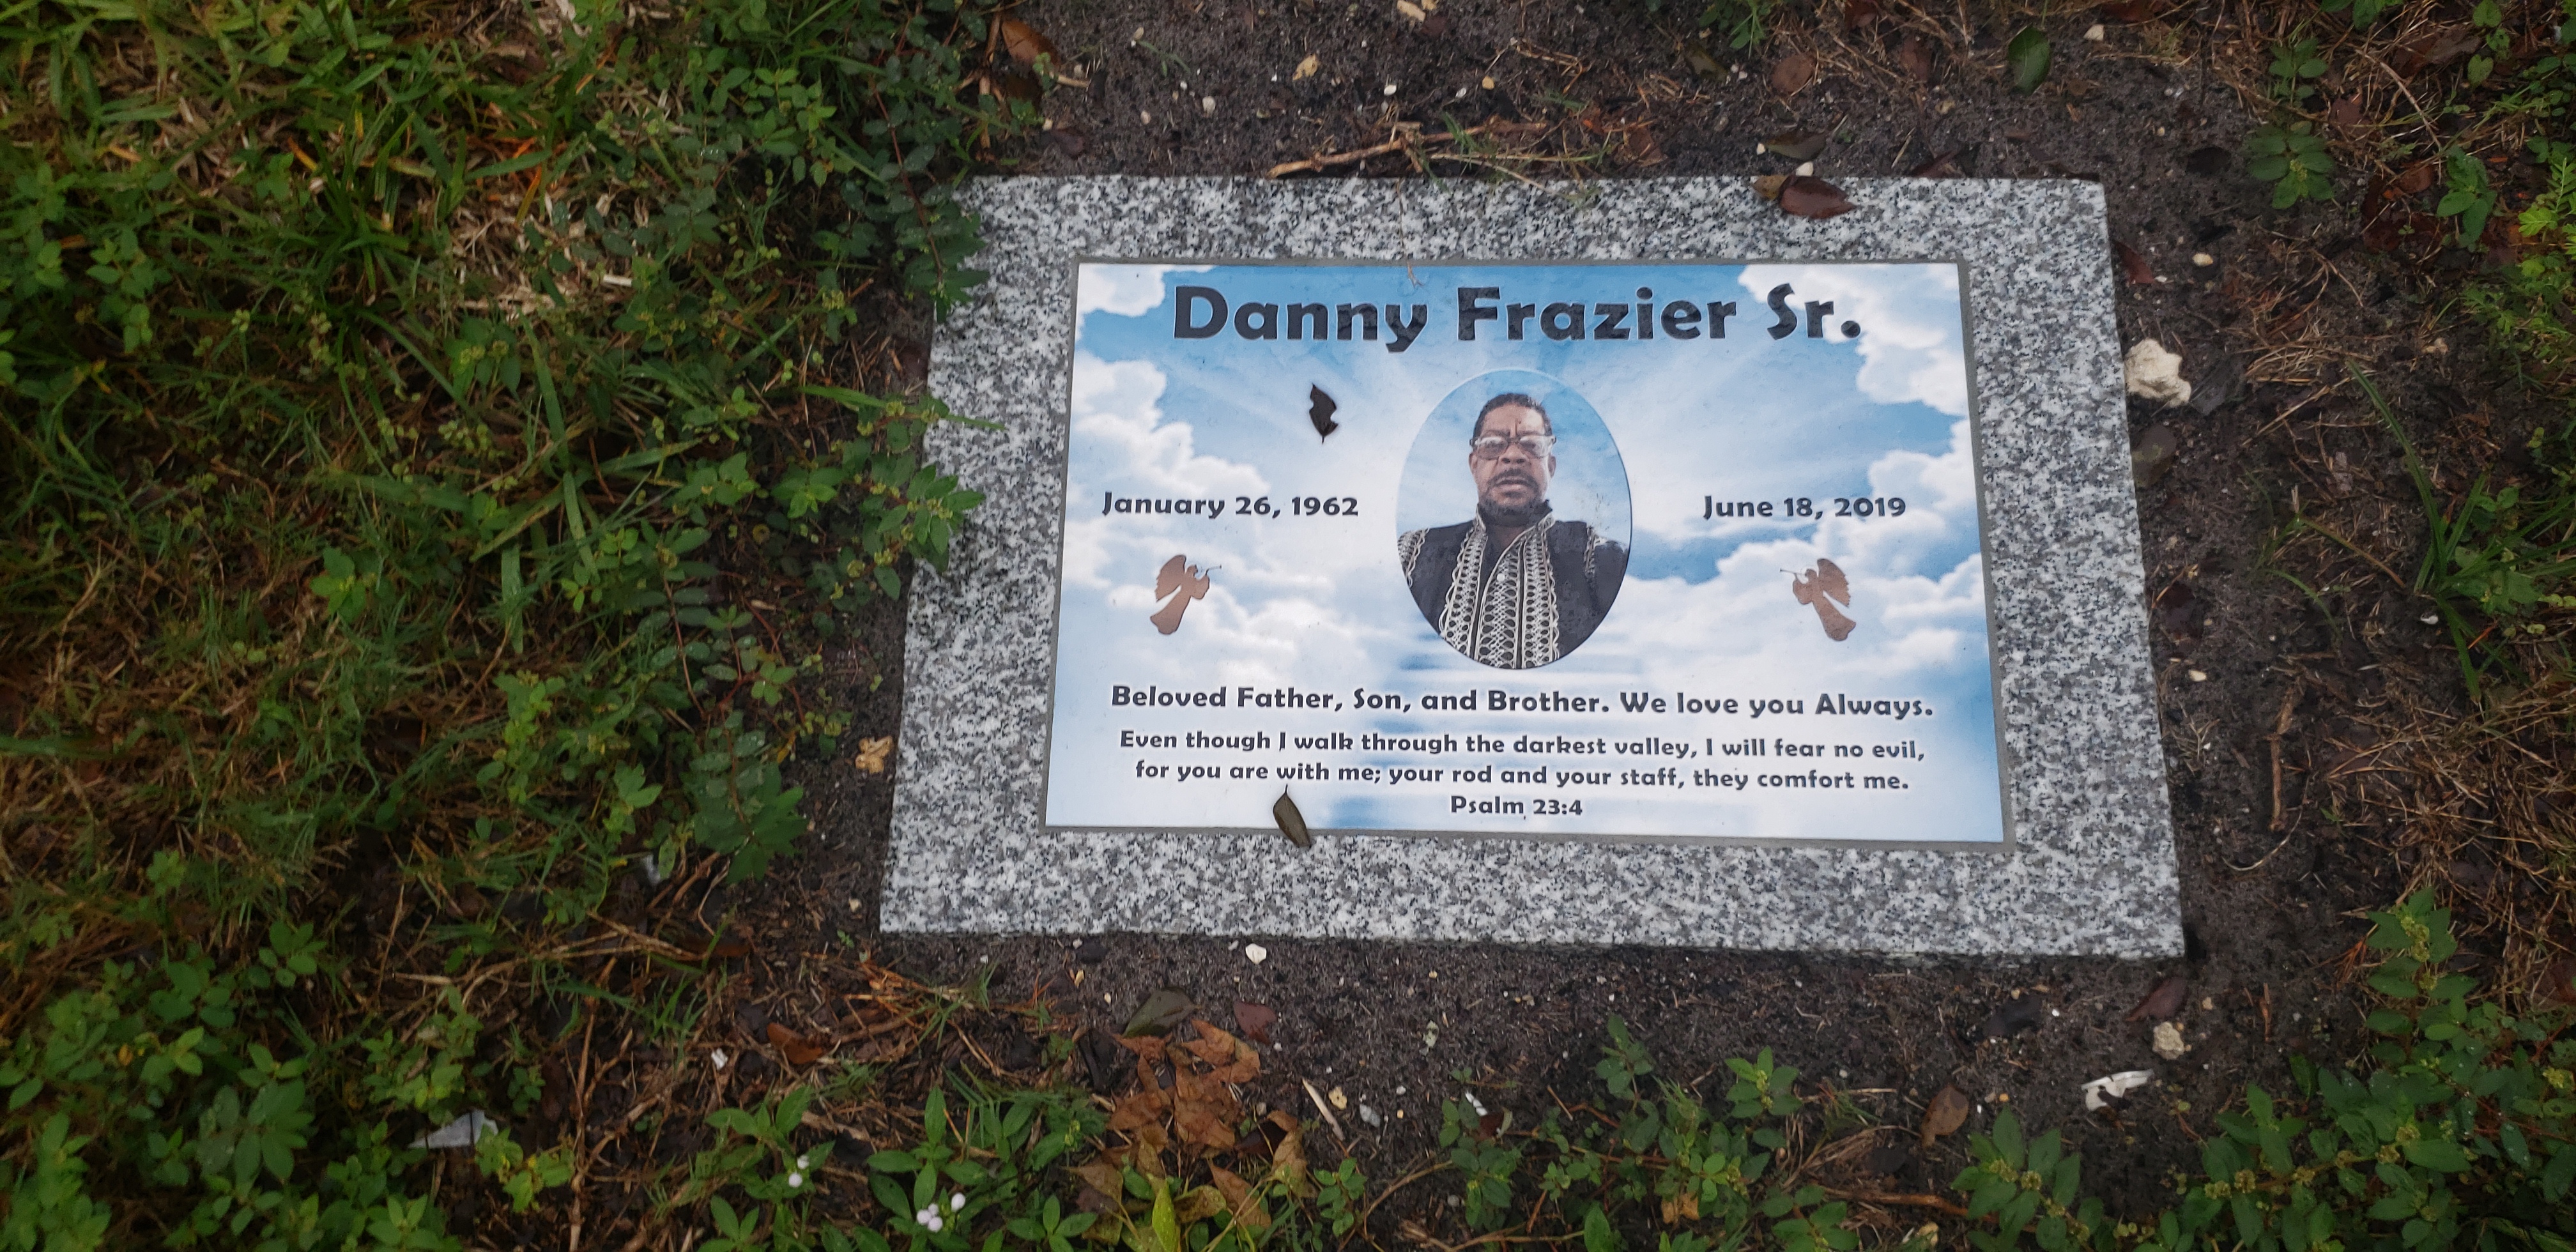 Danny Frazier, Sr